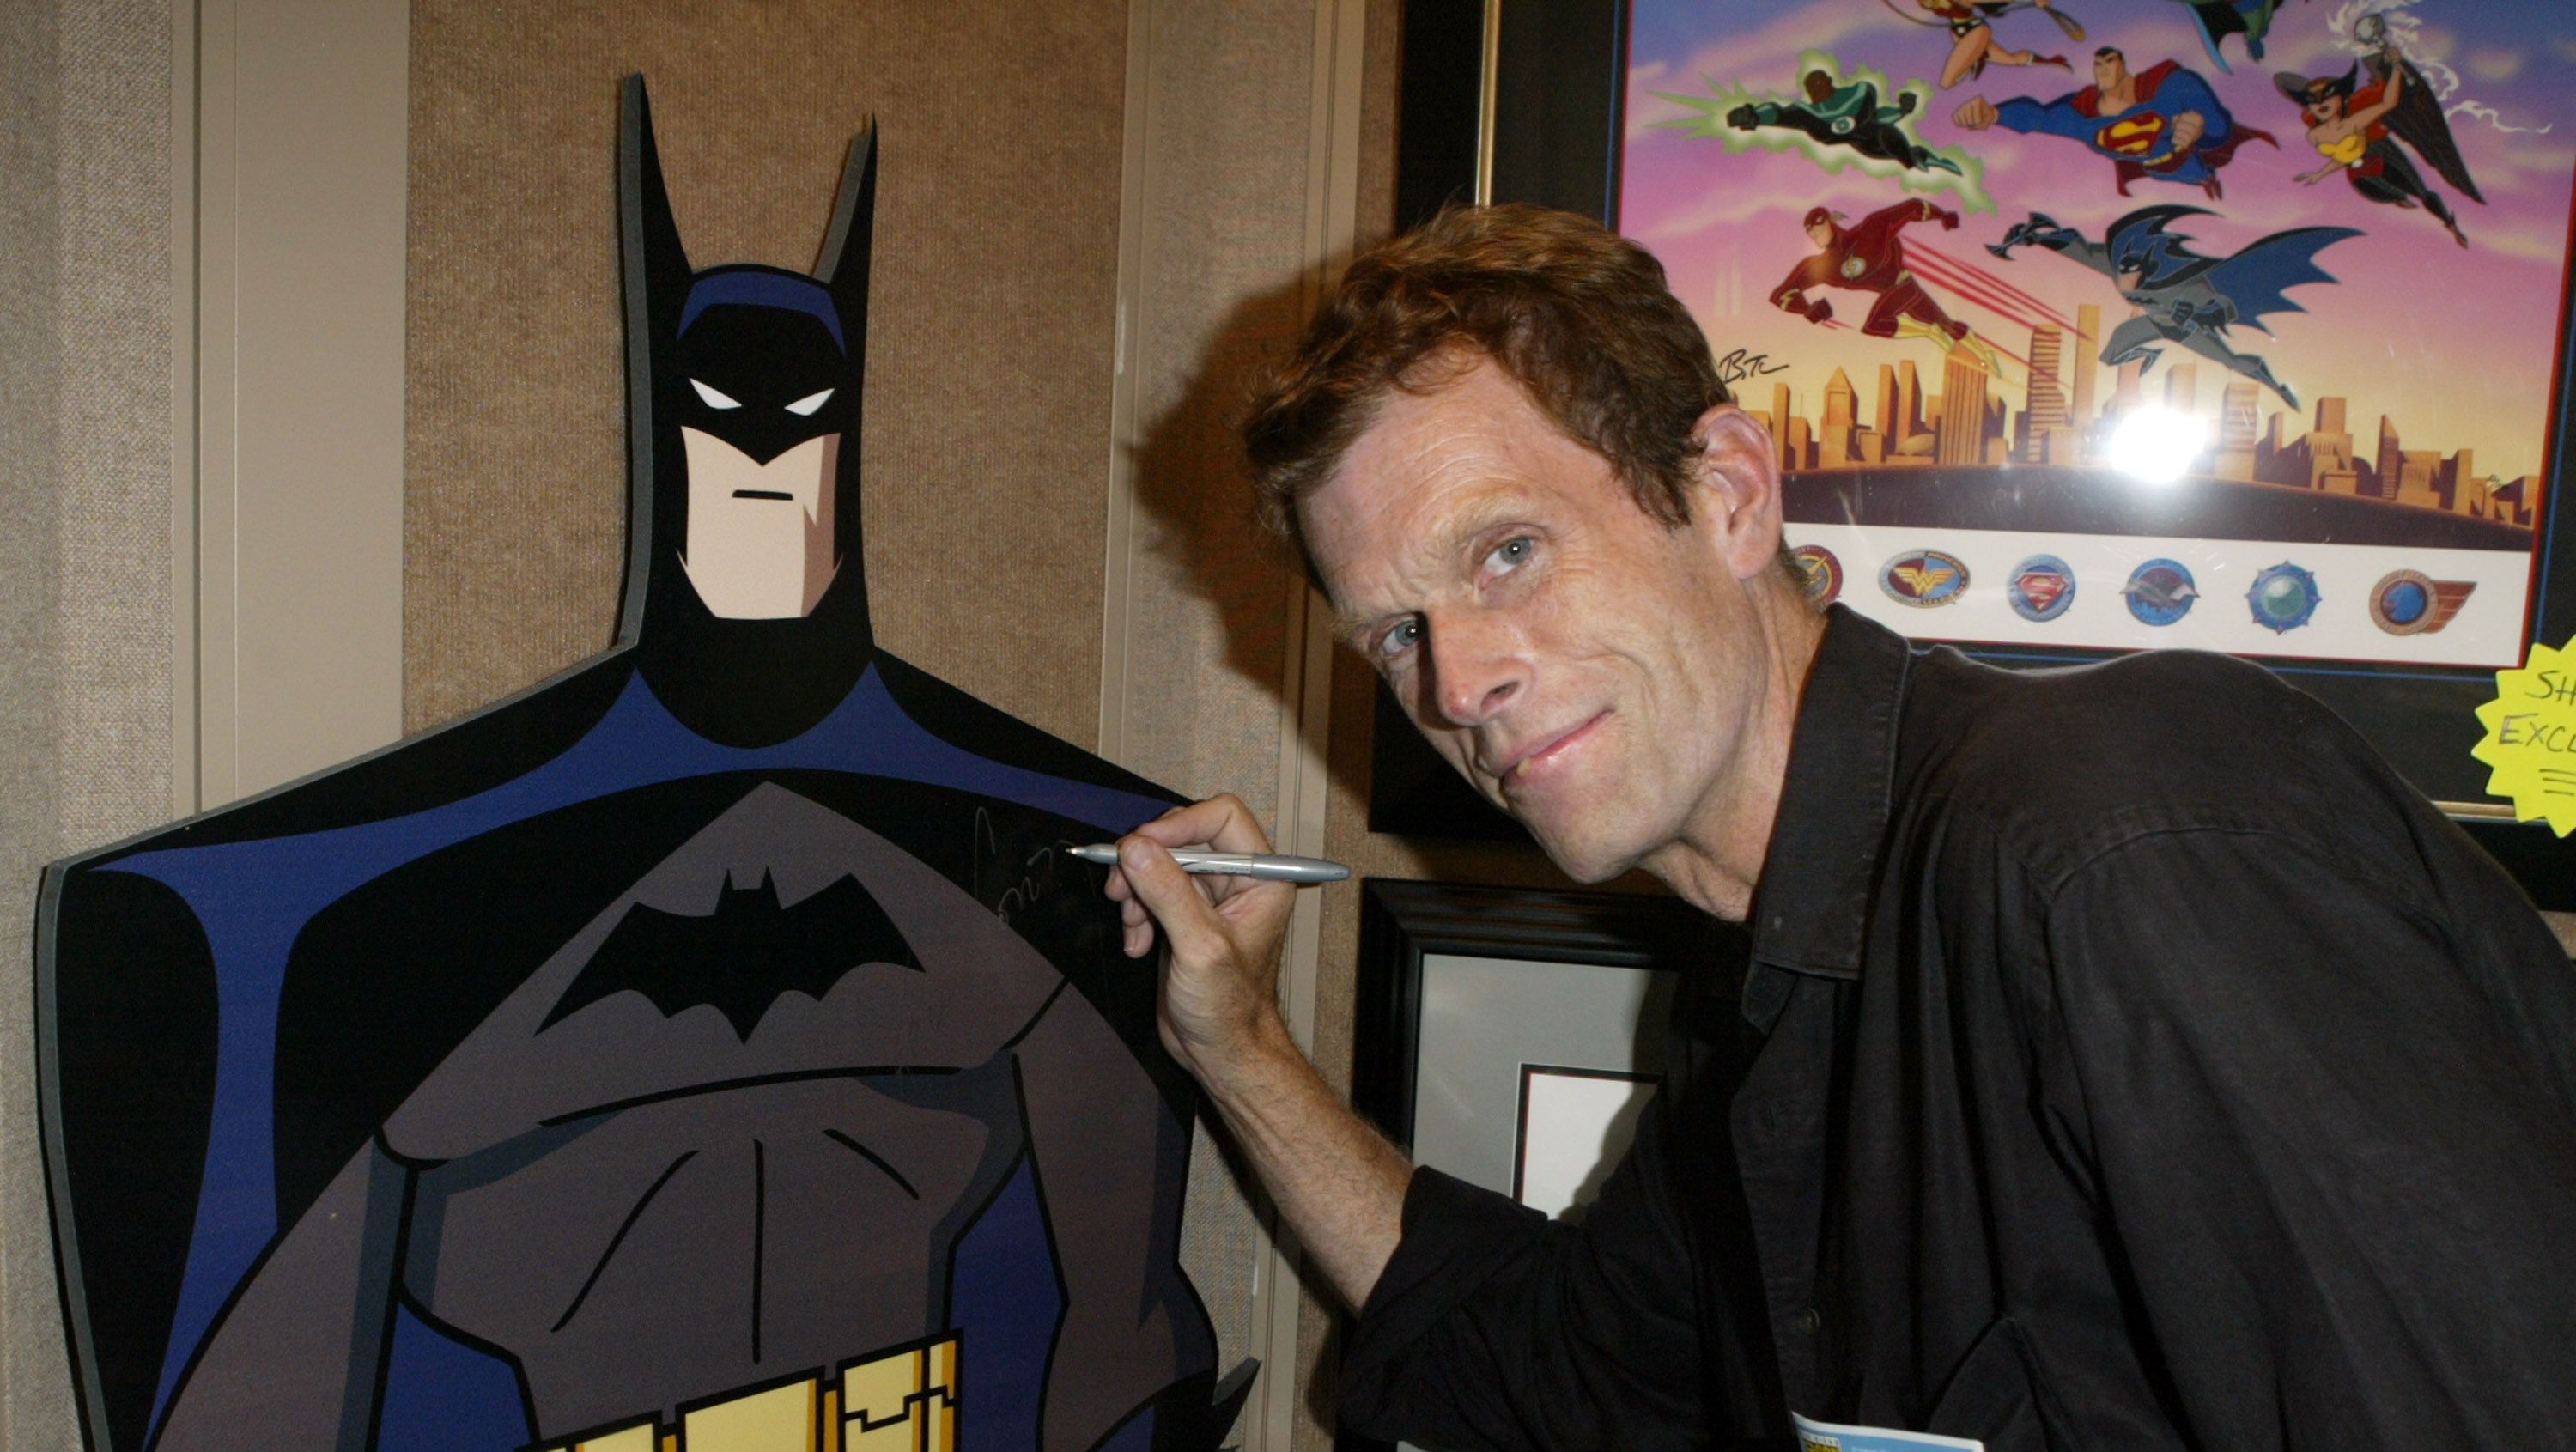 Batman Voice Actor Kevin Conroy Passes Away At 66 - Game Informer